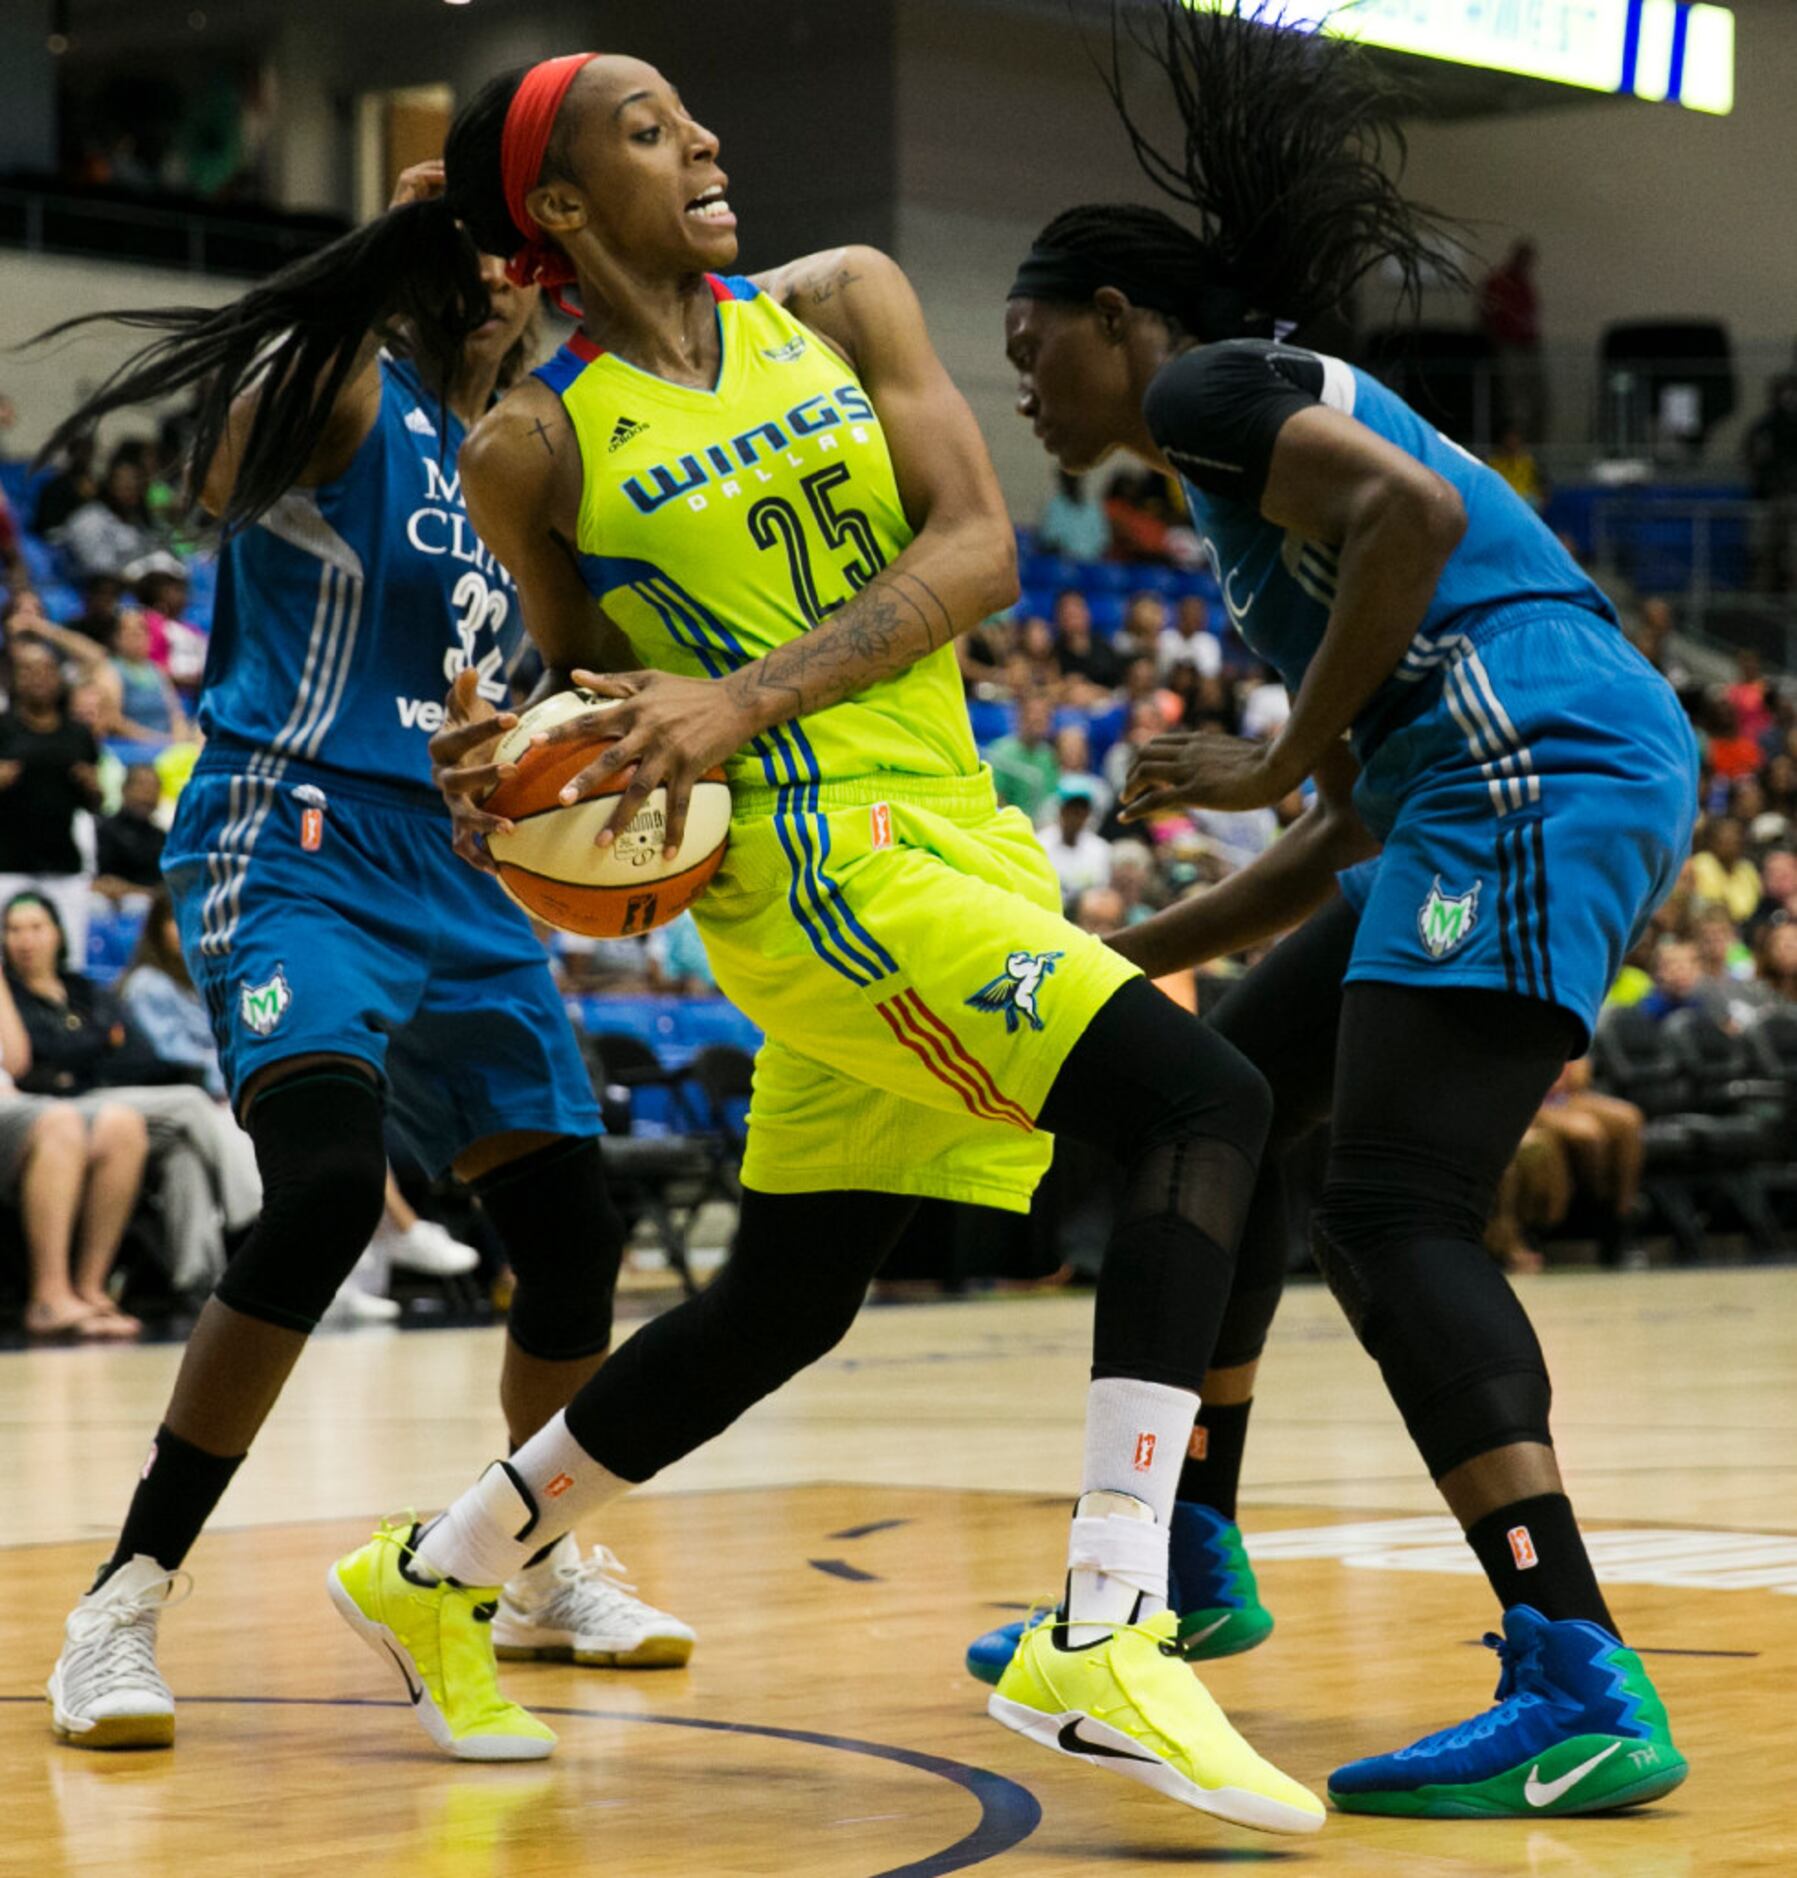 For Courtney Paris, WNBA is a new world